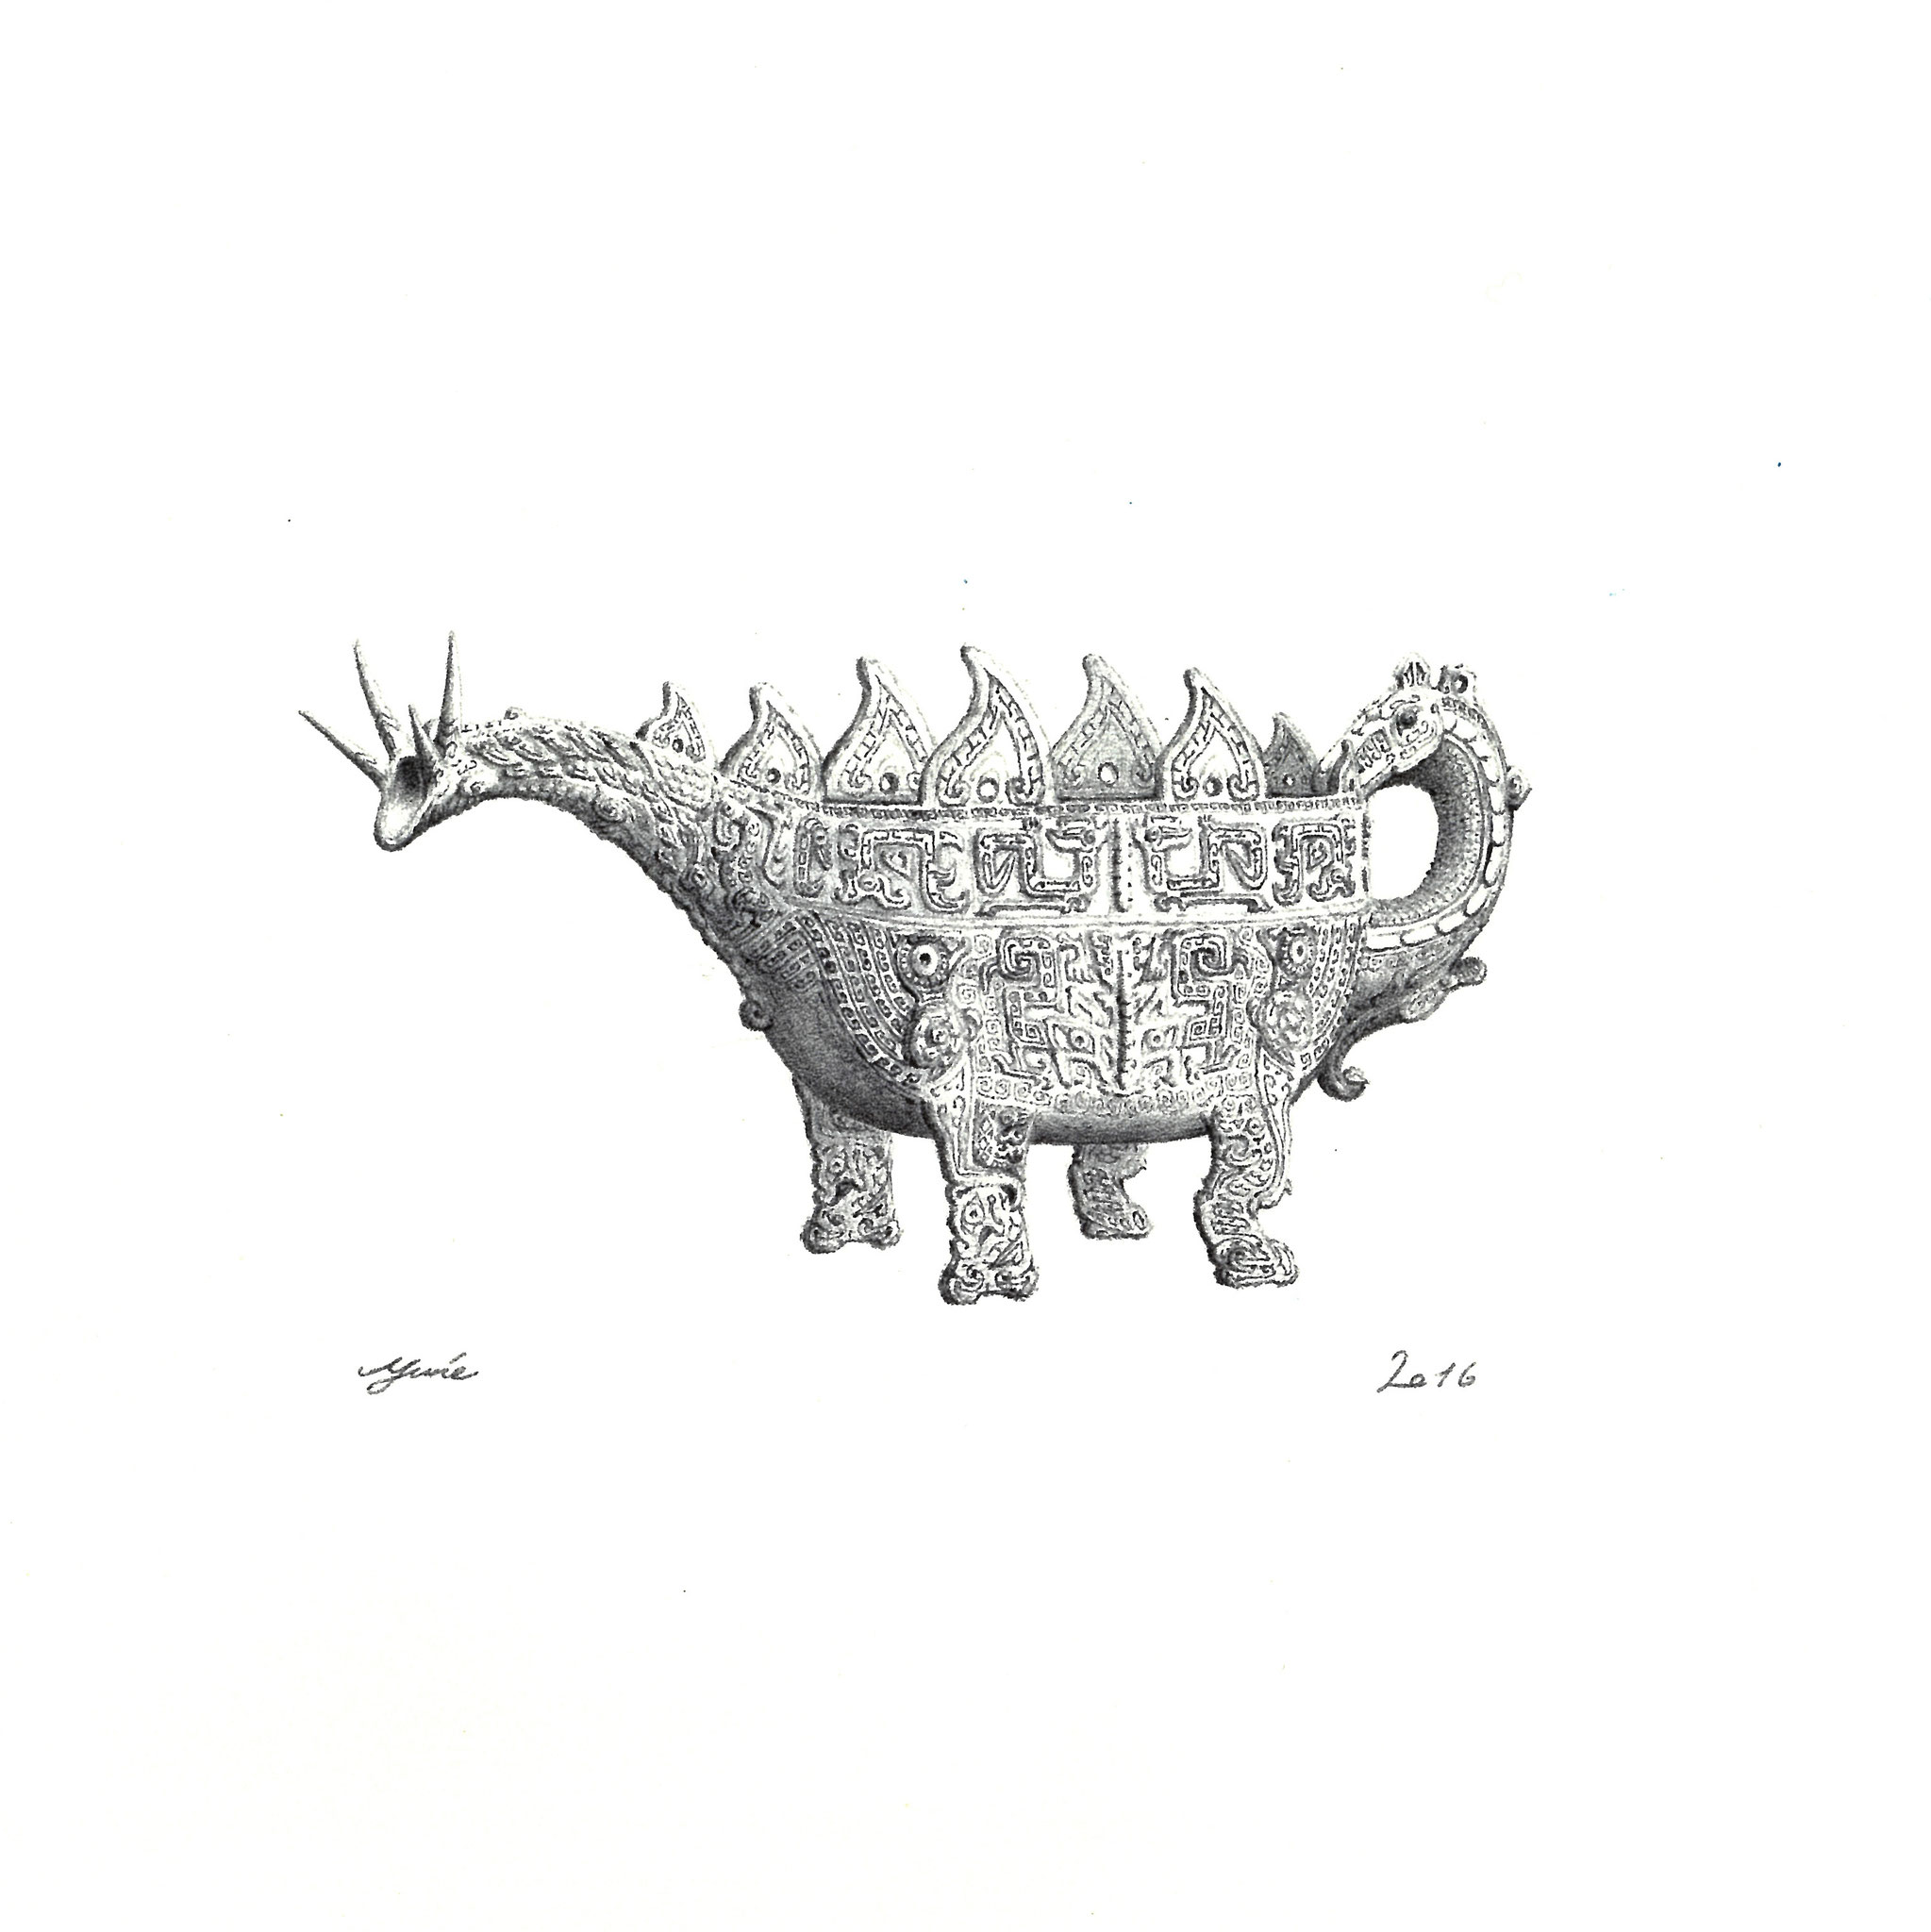 Ritual Bronze: Stegosaurus / 2016 / Ballpoint pen